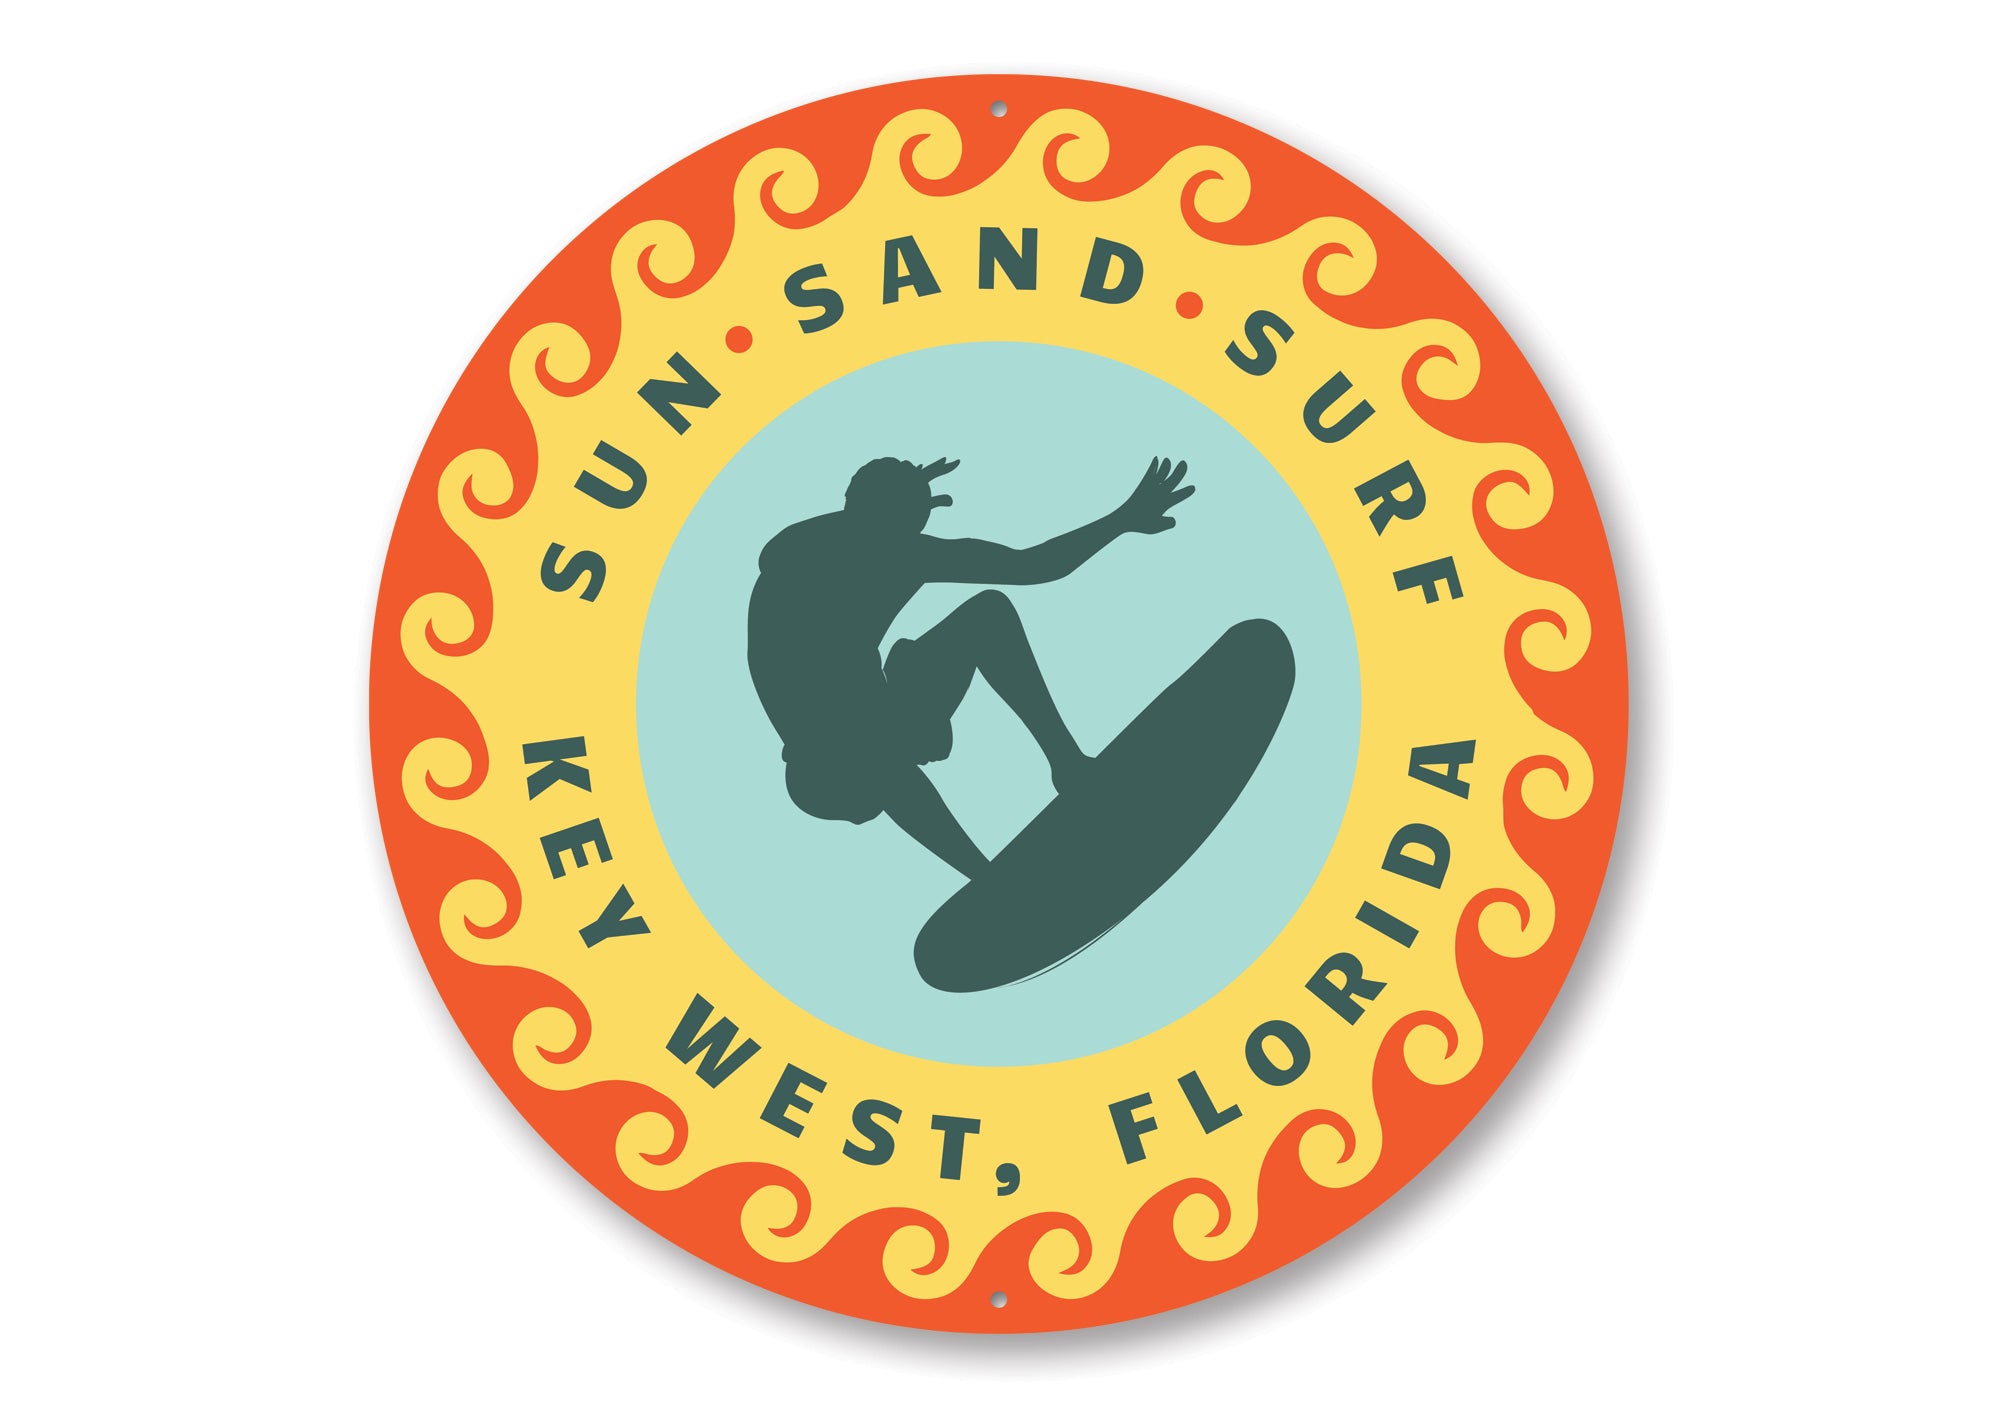 Sun Sand Surf Key West Sign